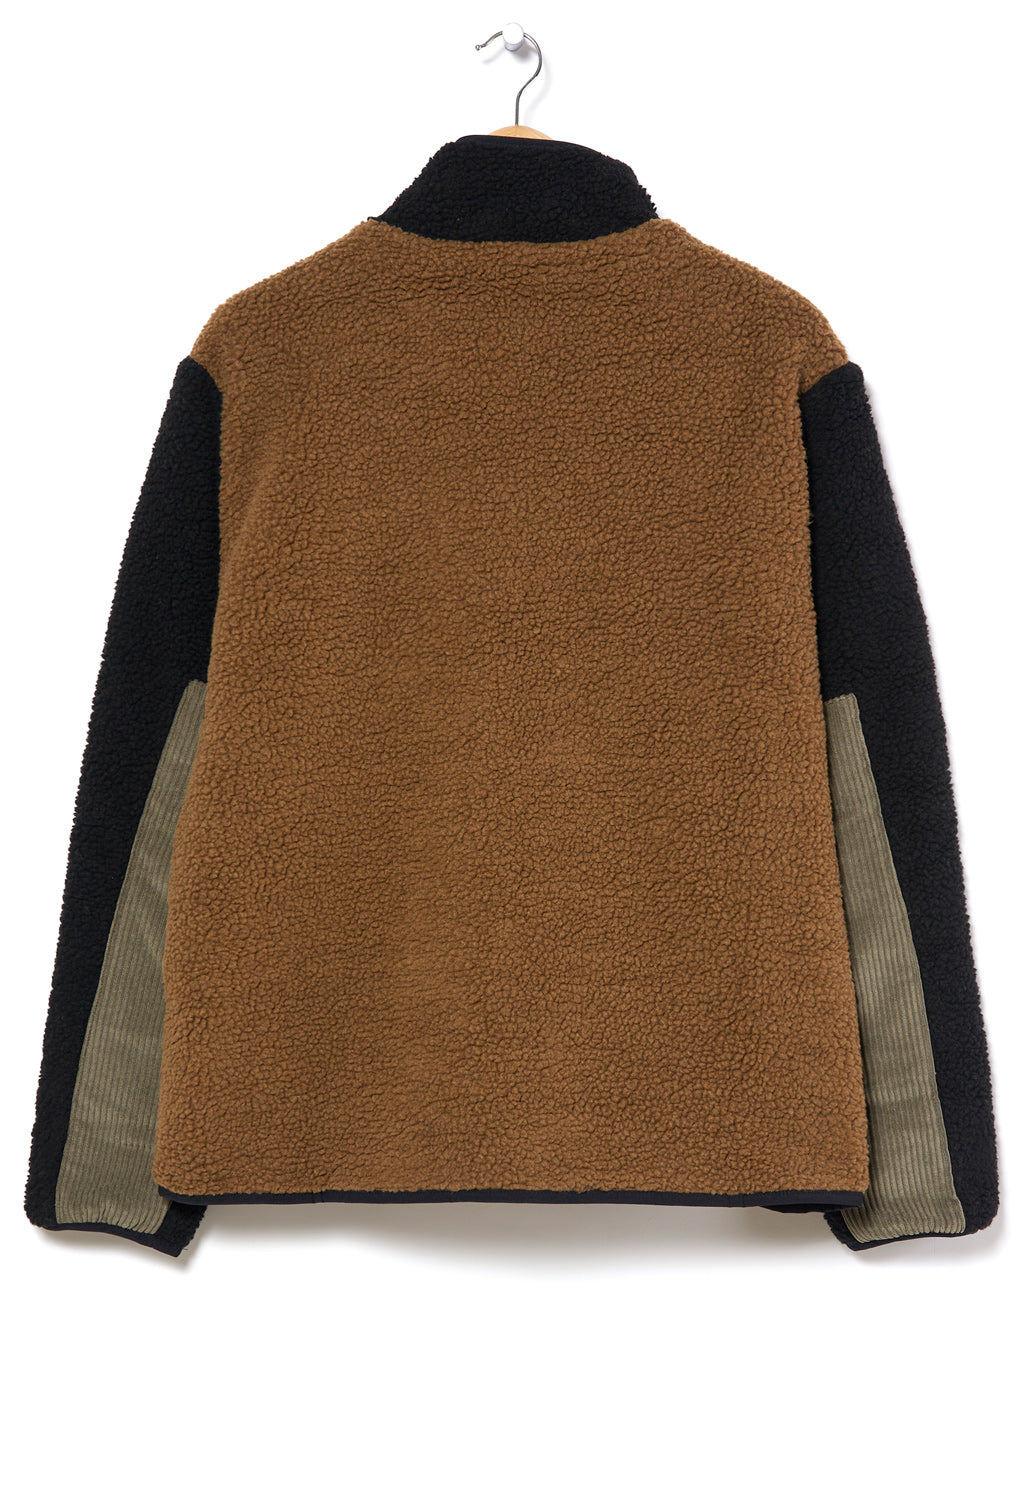 KAVU Men's Wayside Fleece Jacket - Brewed Up